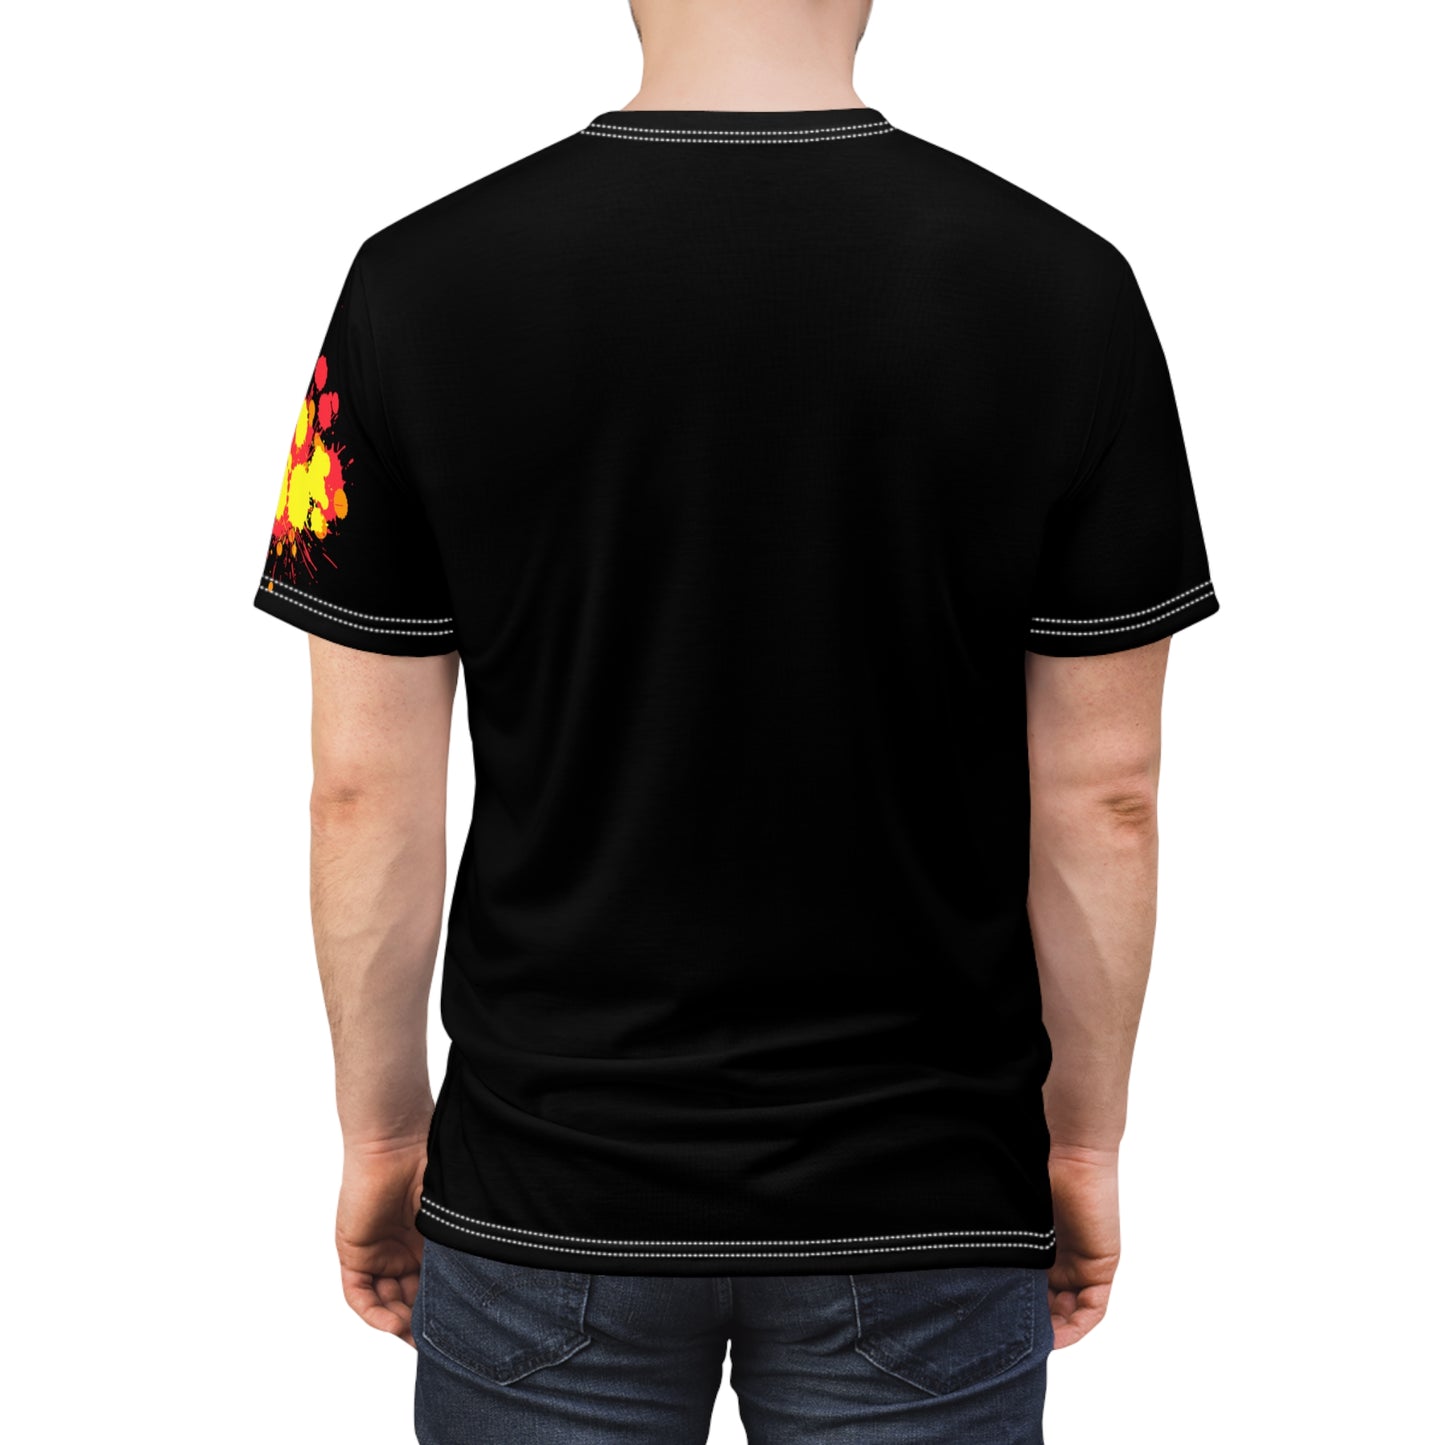 VIP Squad-wear Graffiti-Style Unisex Microfiber T-shirt with sleeve art